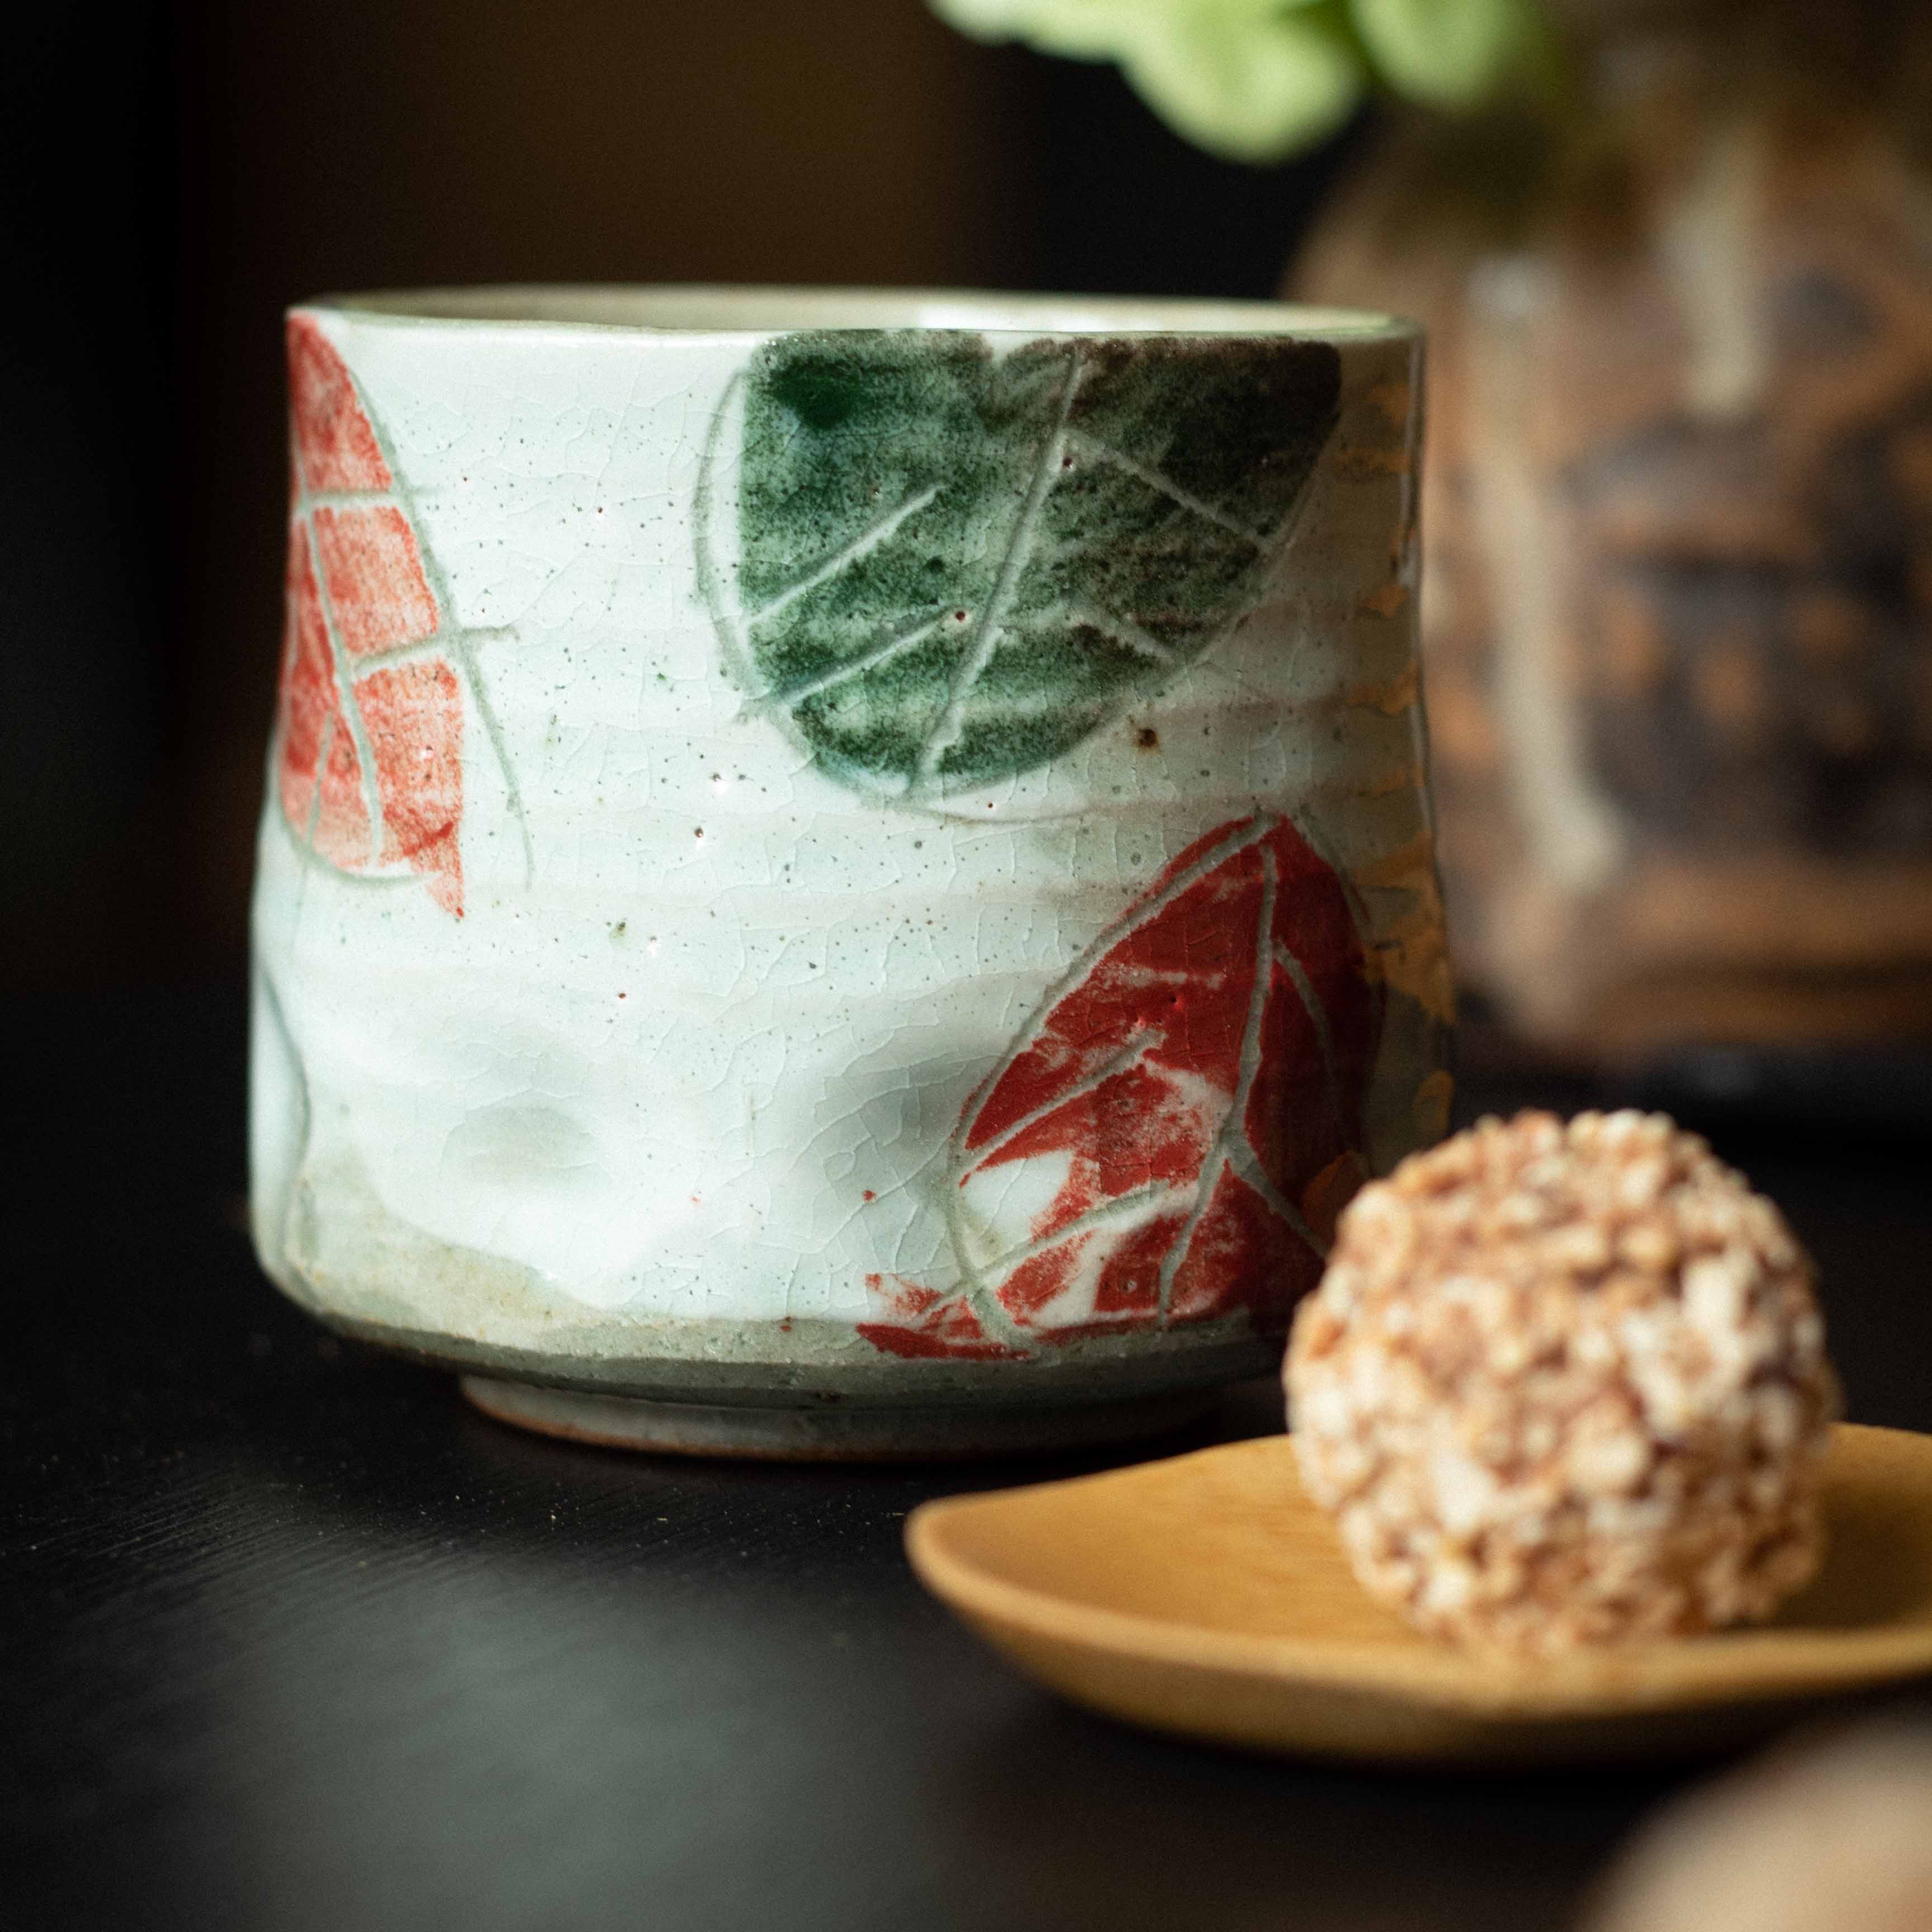 Yunomi-tea mug with leaves, 160 ml